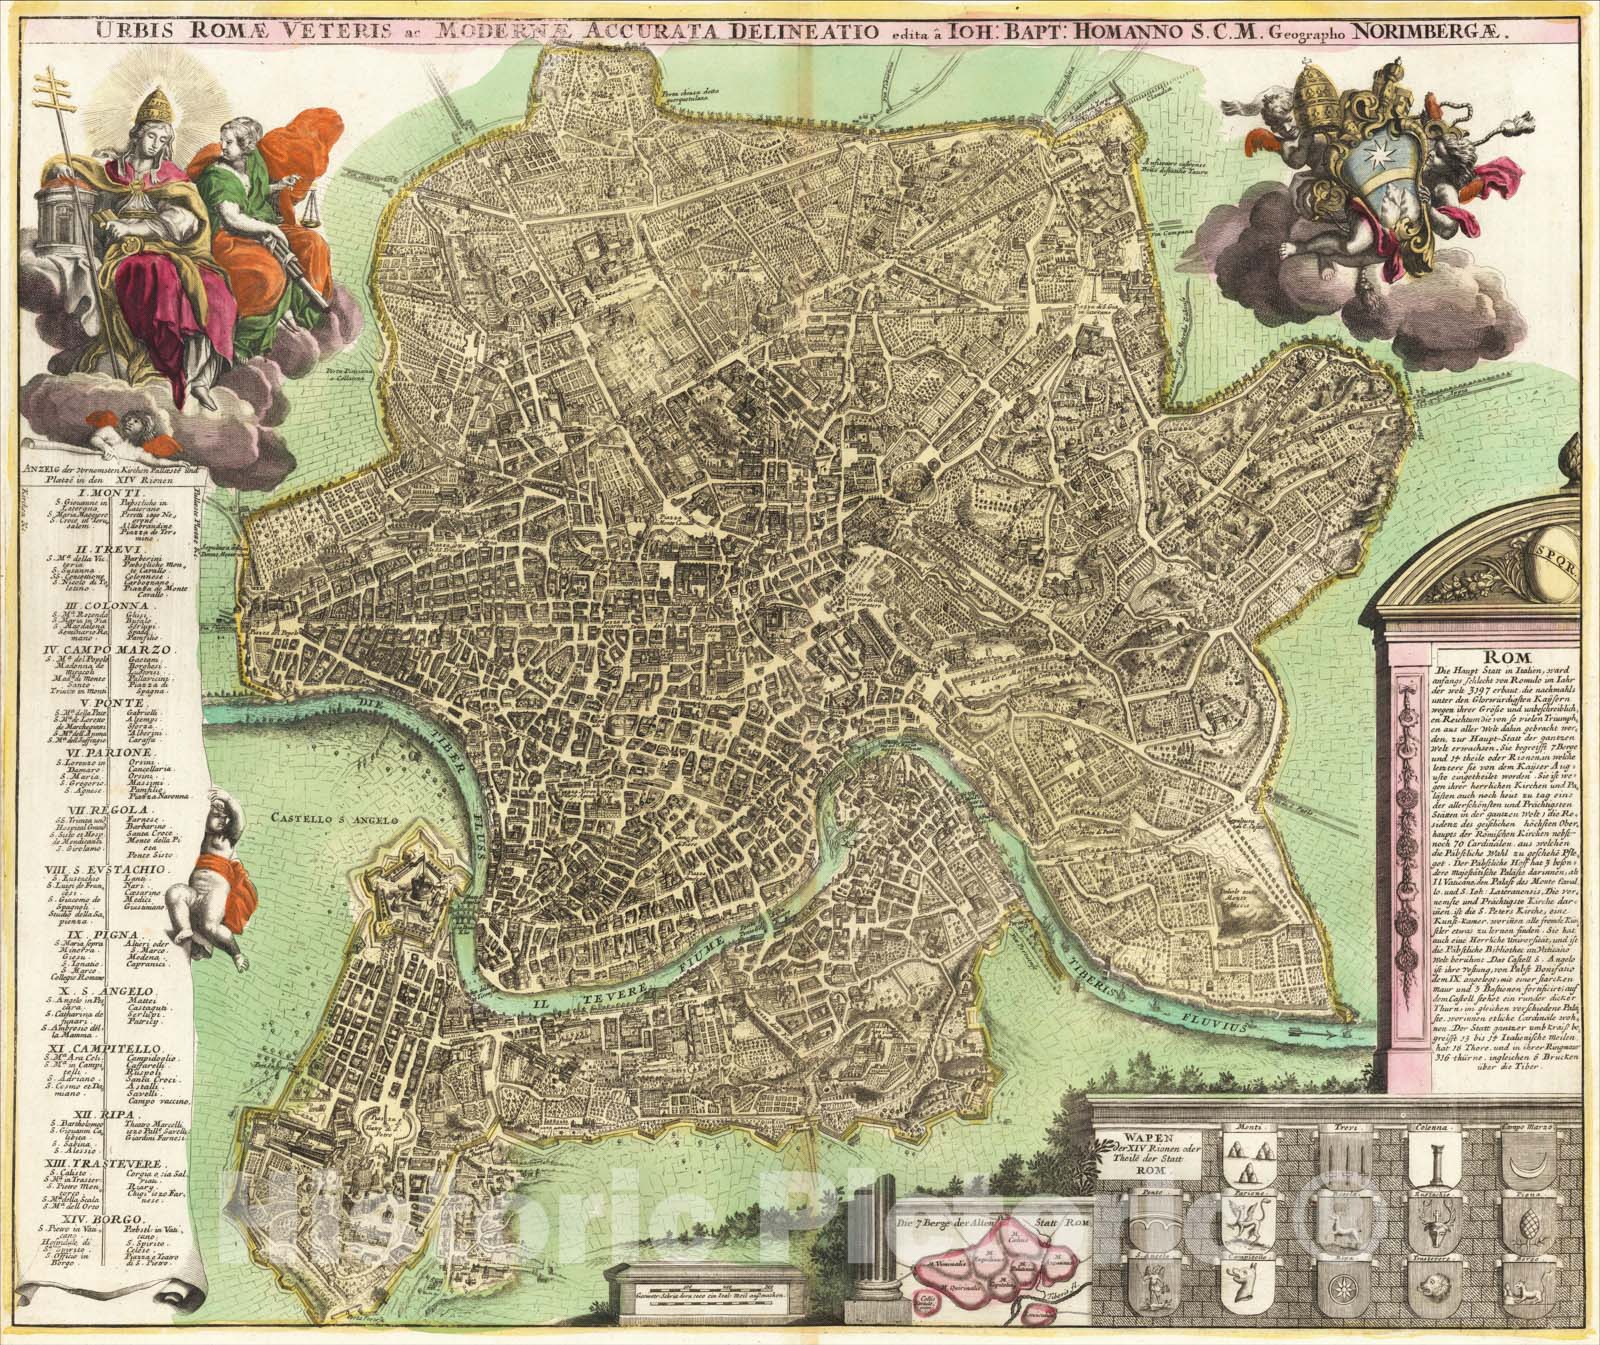 Historic Map : Urbis Romae Veteris ac Modernae Accurata Delineatio edita a Ioh: Bapt: Hommano S.C.M Geographio Norimbergae, 1716, Johann Baptist Homann, v1, Vintage Wall Art